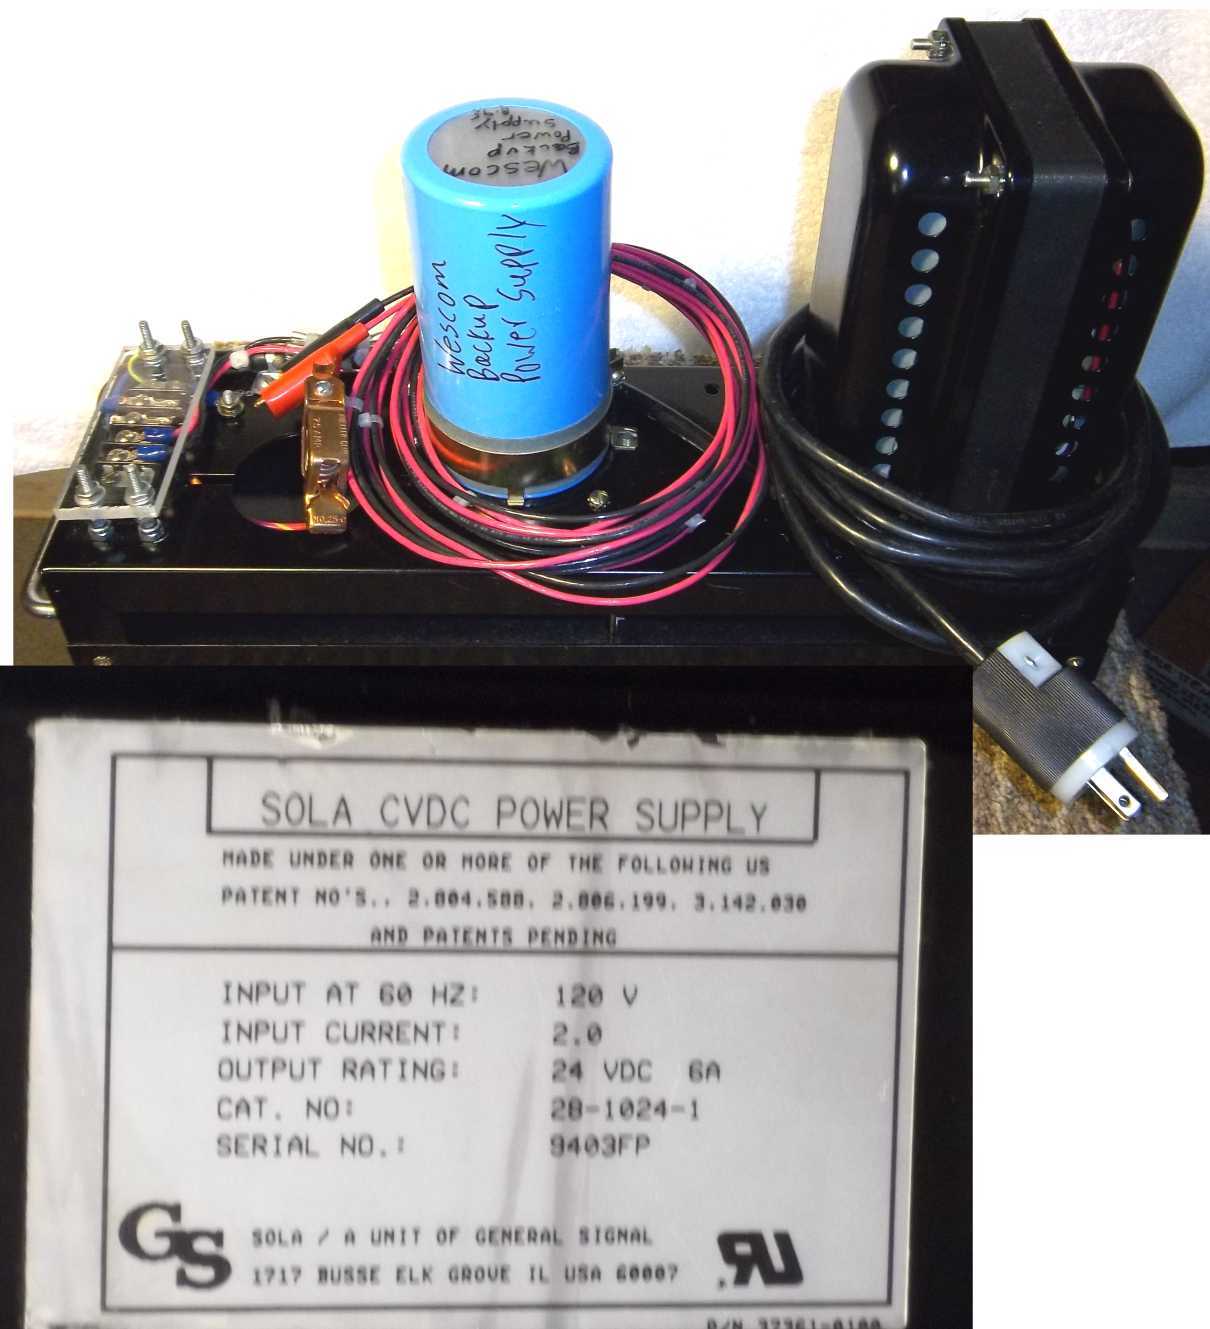 General Signal Constant voltage DC power supply power supplies SOLA CVDC DC POWER SUPPLY 28-1024-1 24volt 6a 